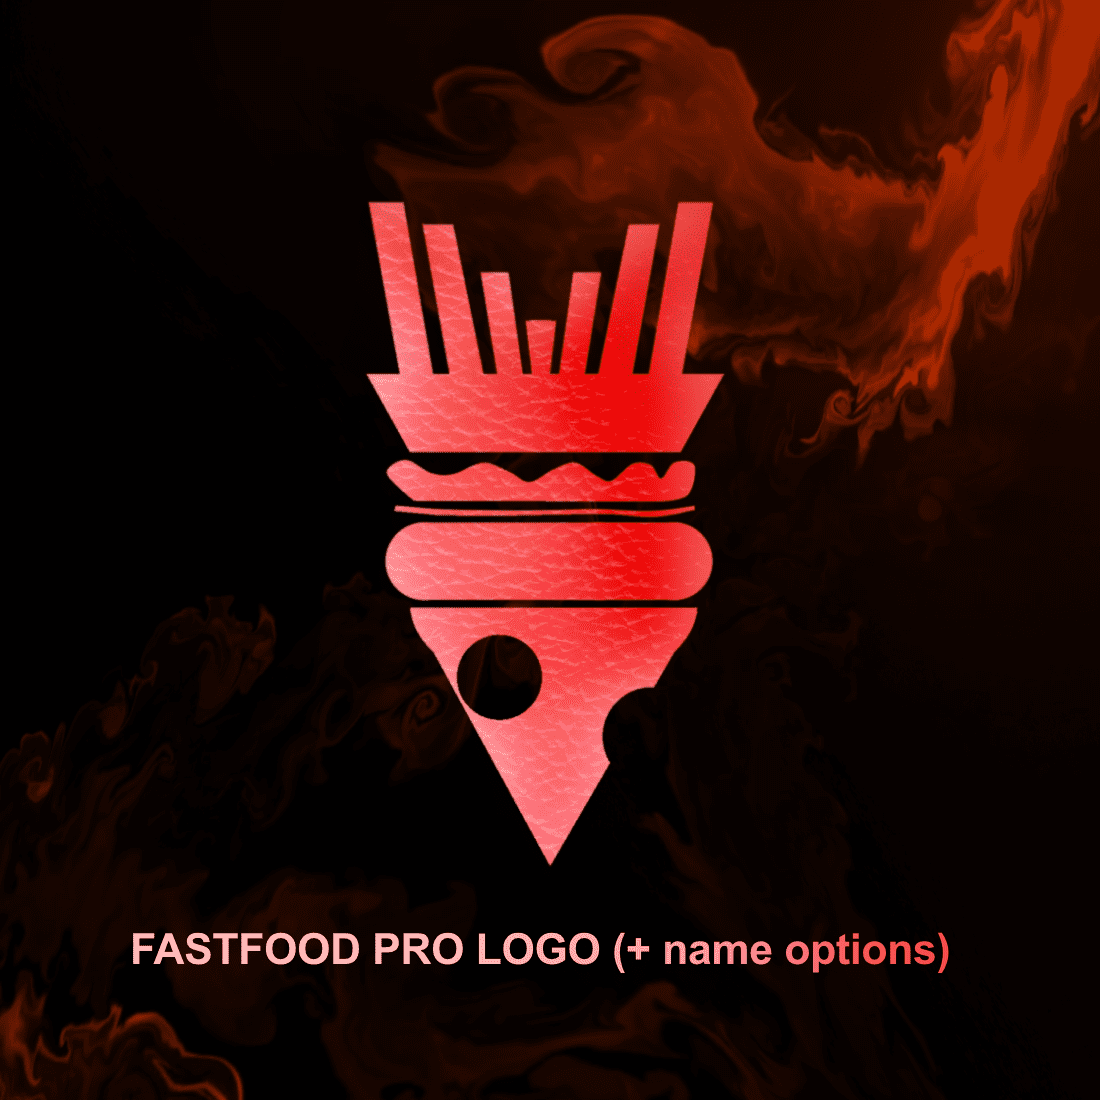 Burger pro logo cover image.